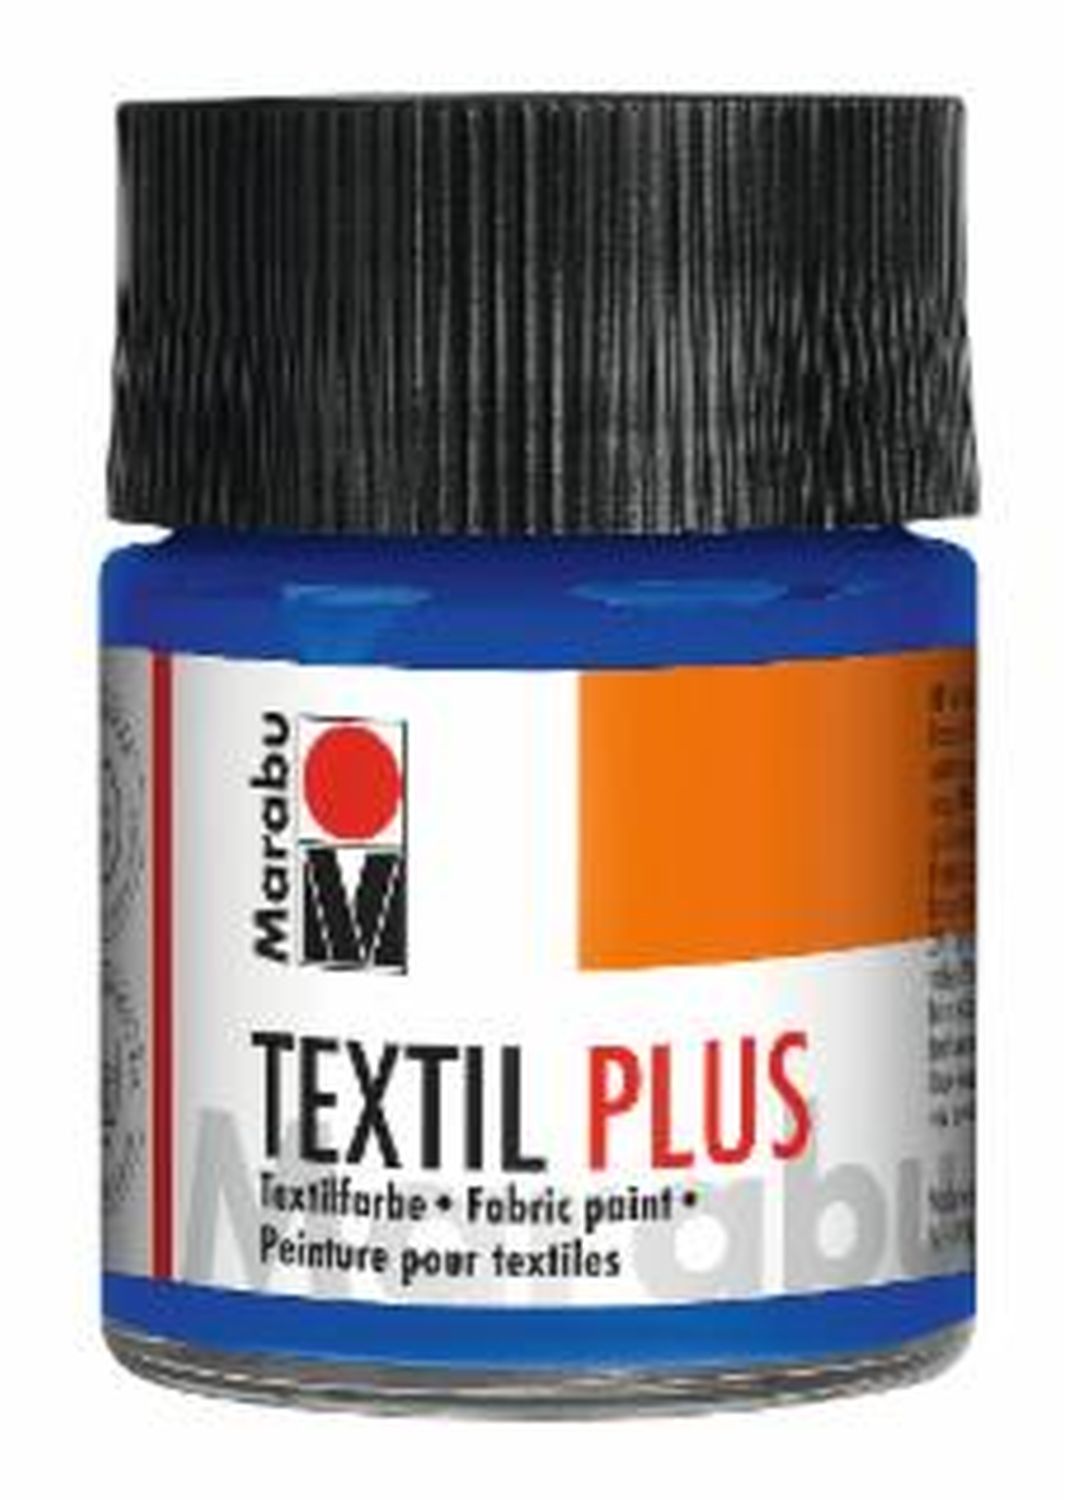 Textil plus - Ultramarinblau dunkel 055, 50 ml